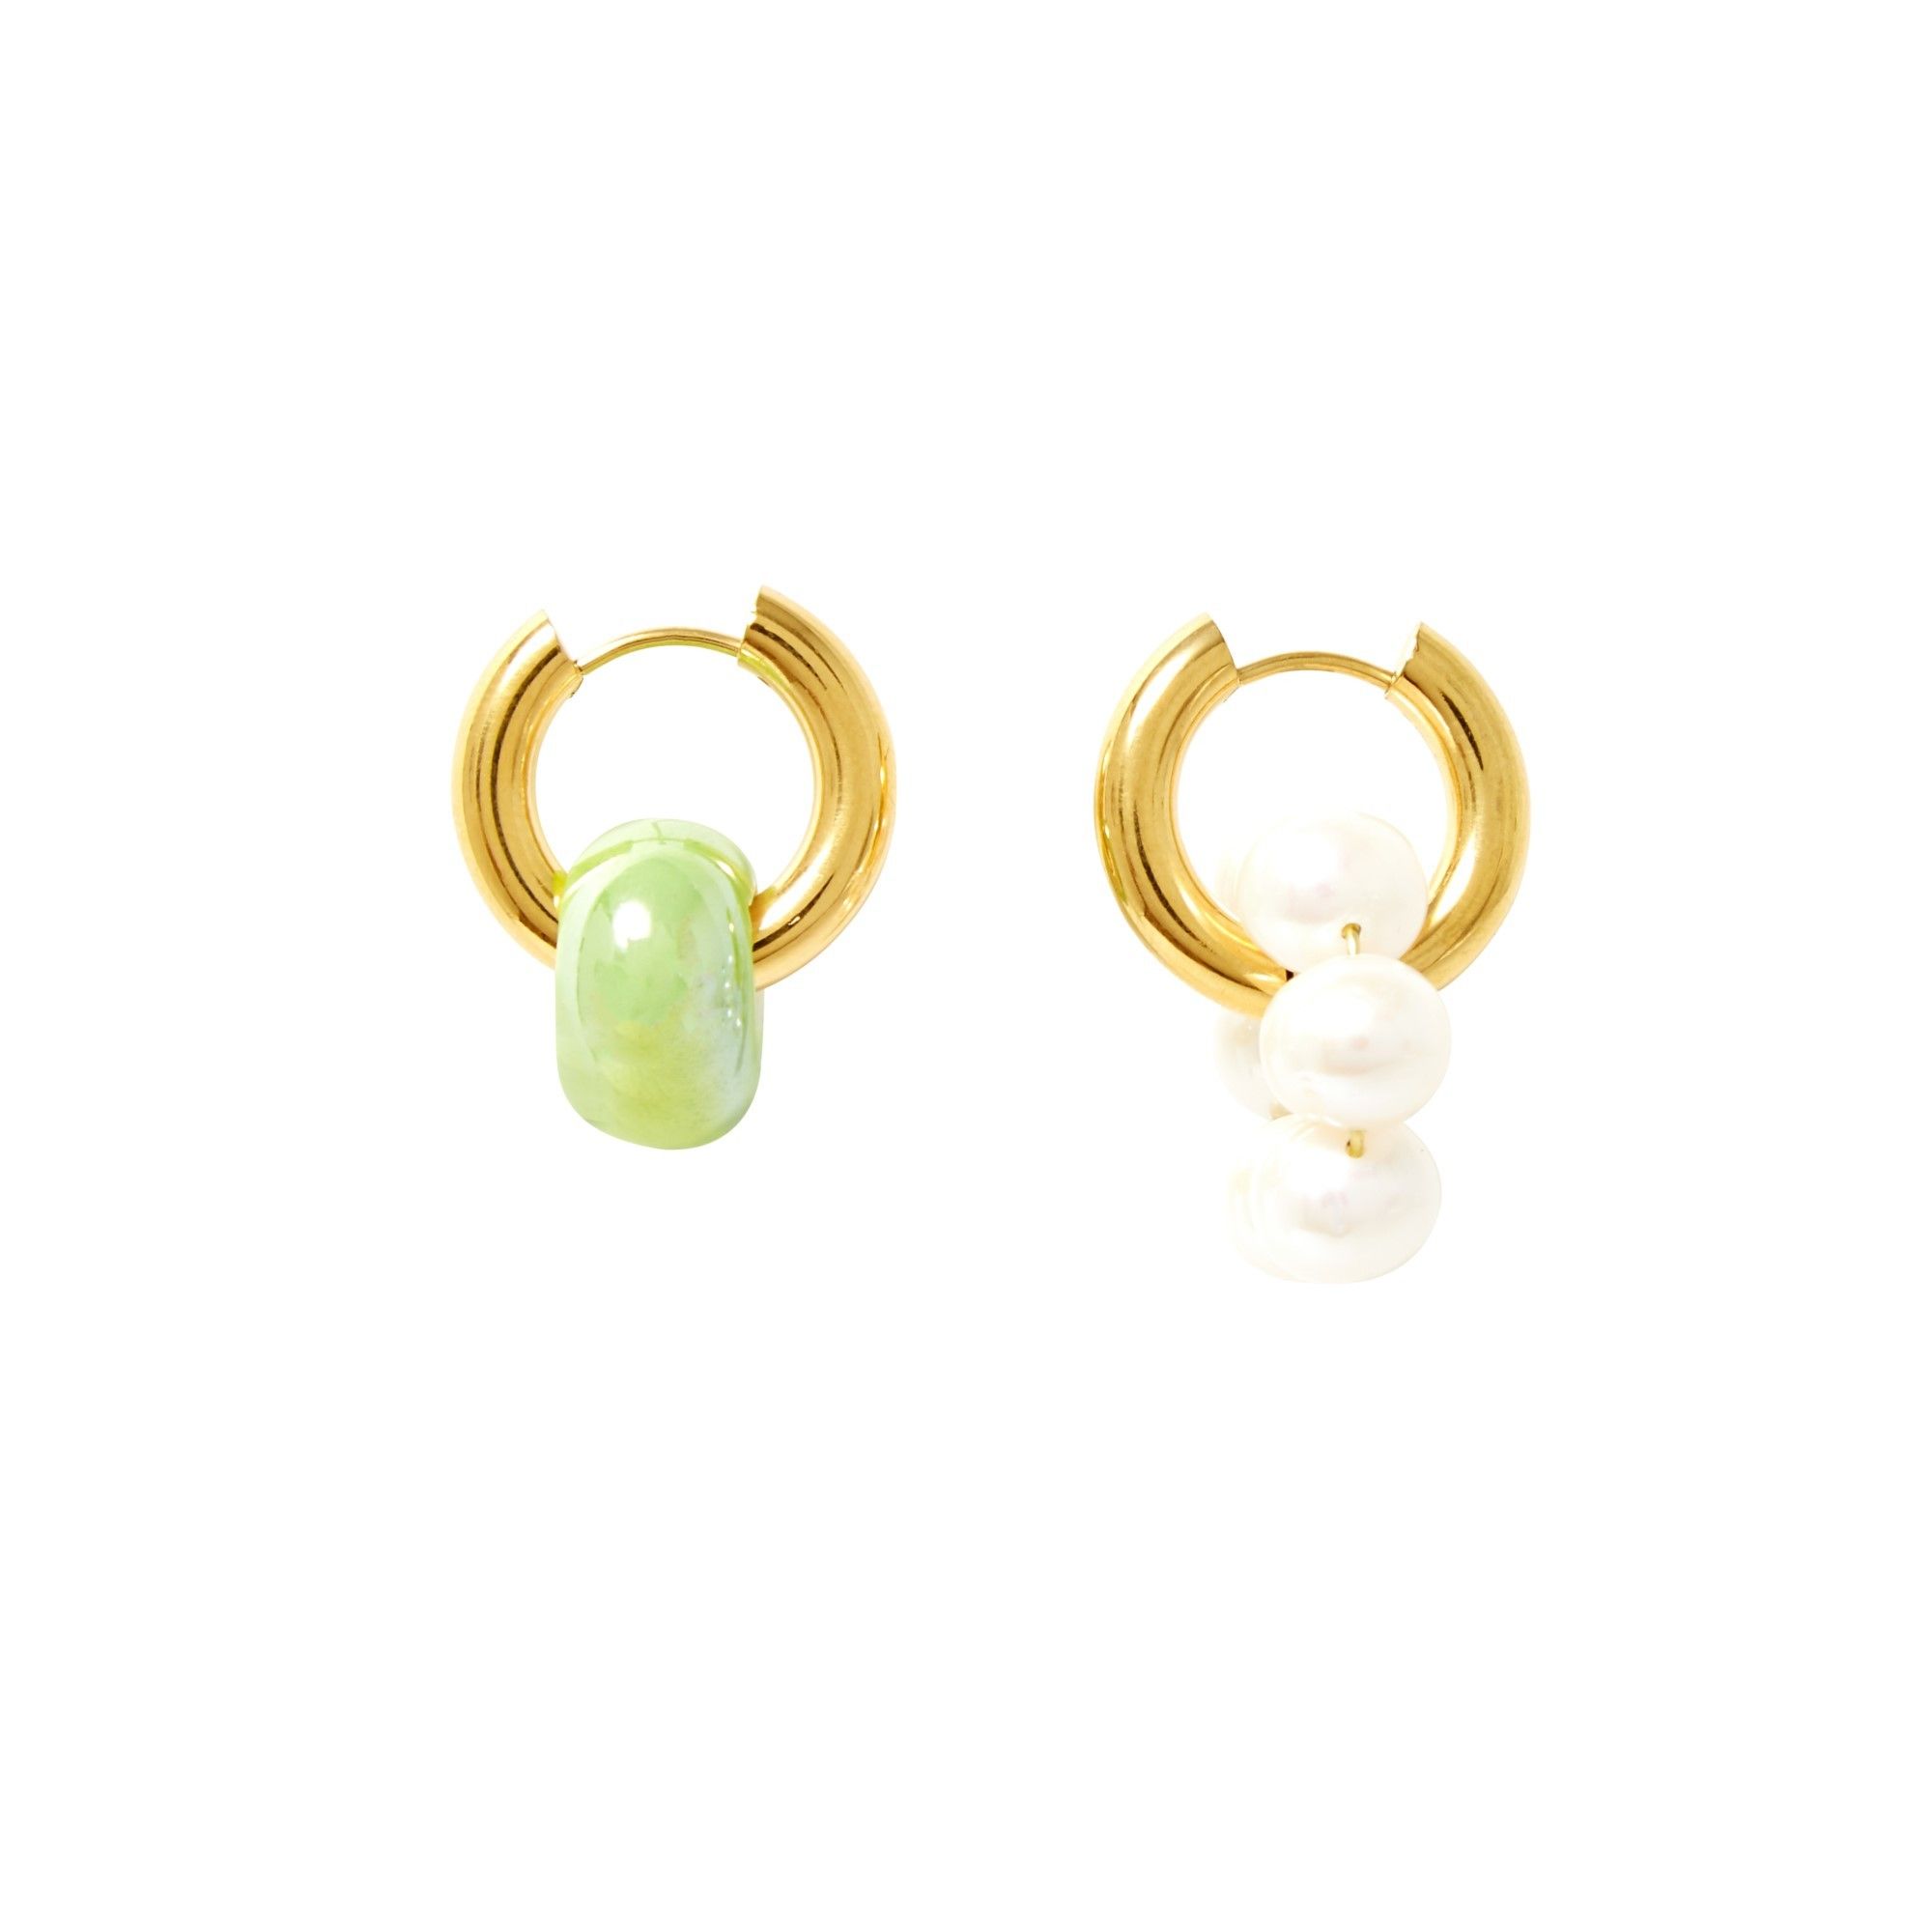 Timeless Pearly - Boucles d'Oreilles Dépareillées Perles et Donut - Femme - Vert